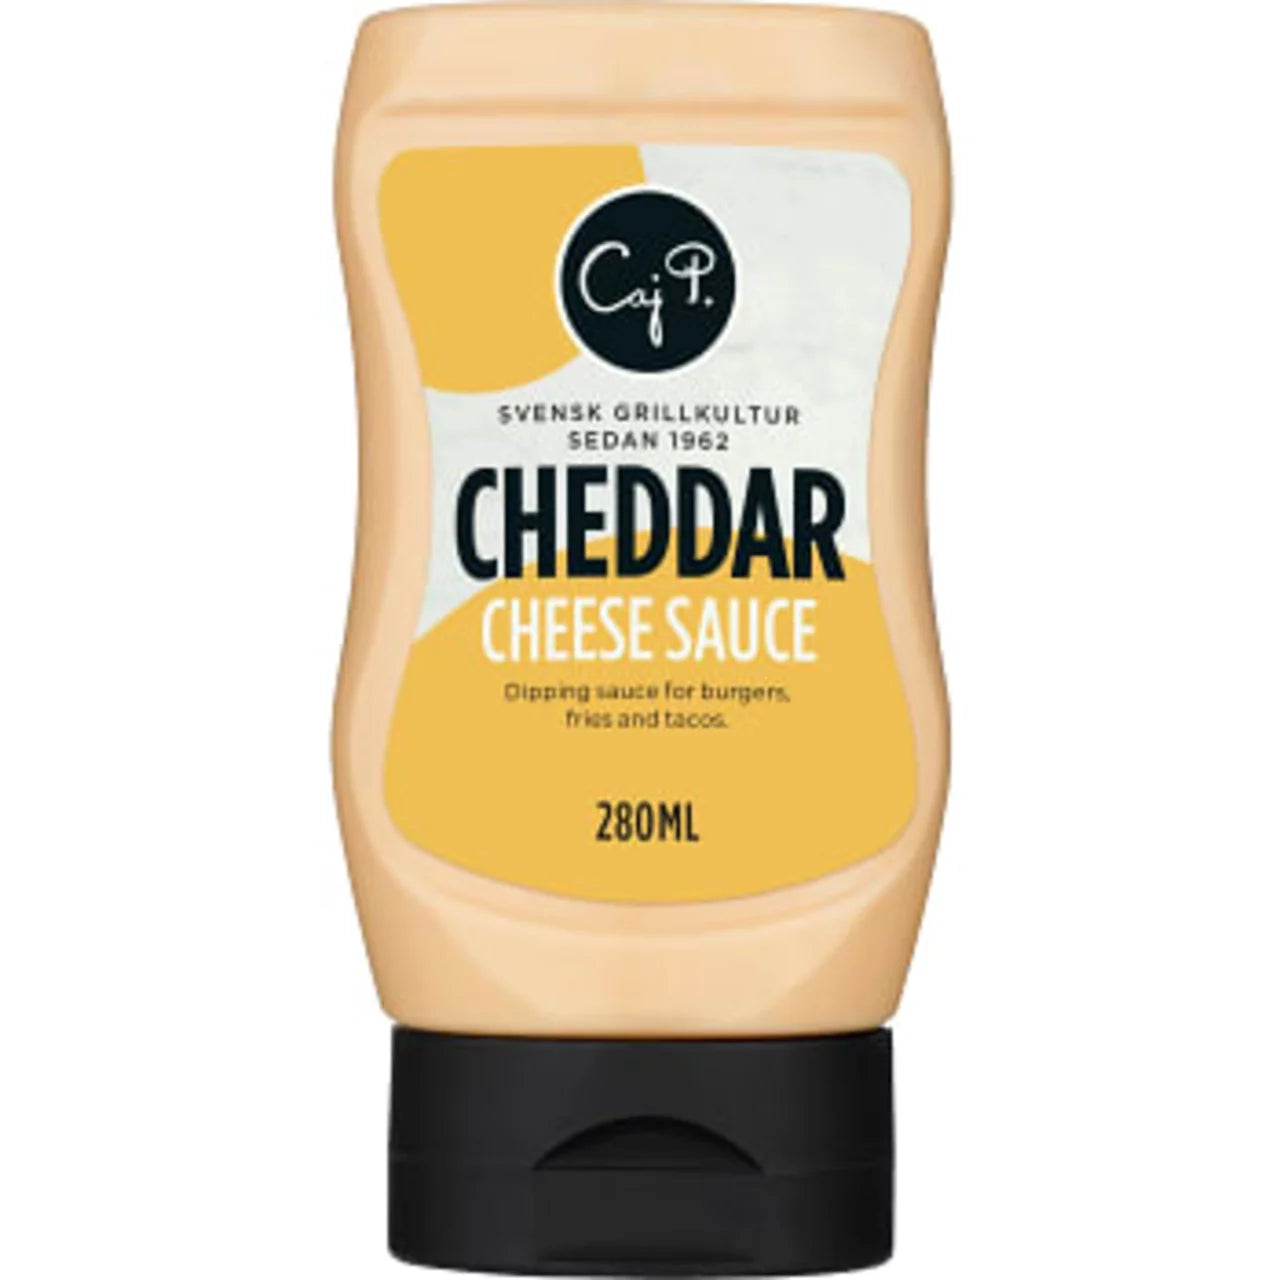 Swedish Cheddar Cheese - Cheddar Cheese Sauce Caj P 280ml